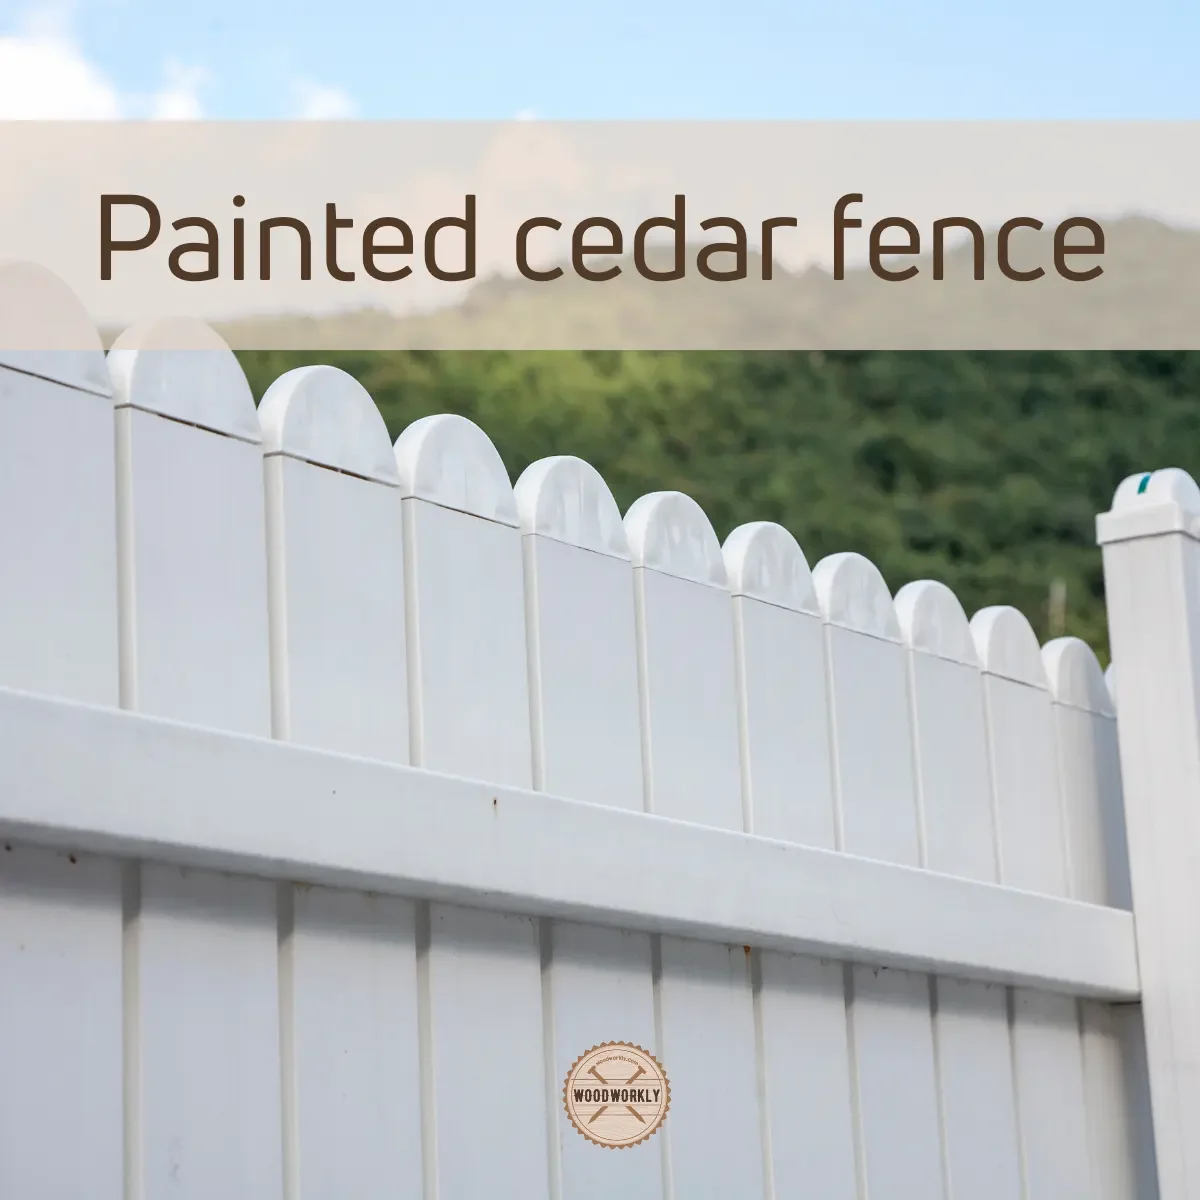 Painted cedar fence